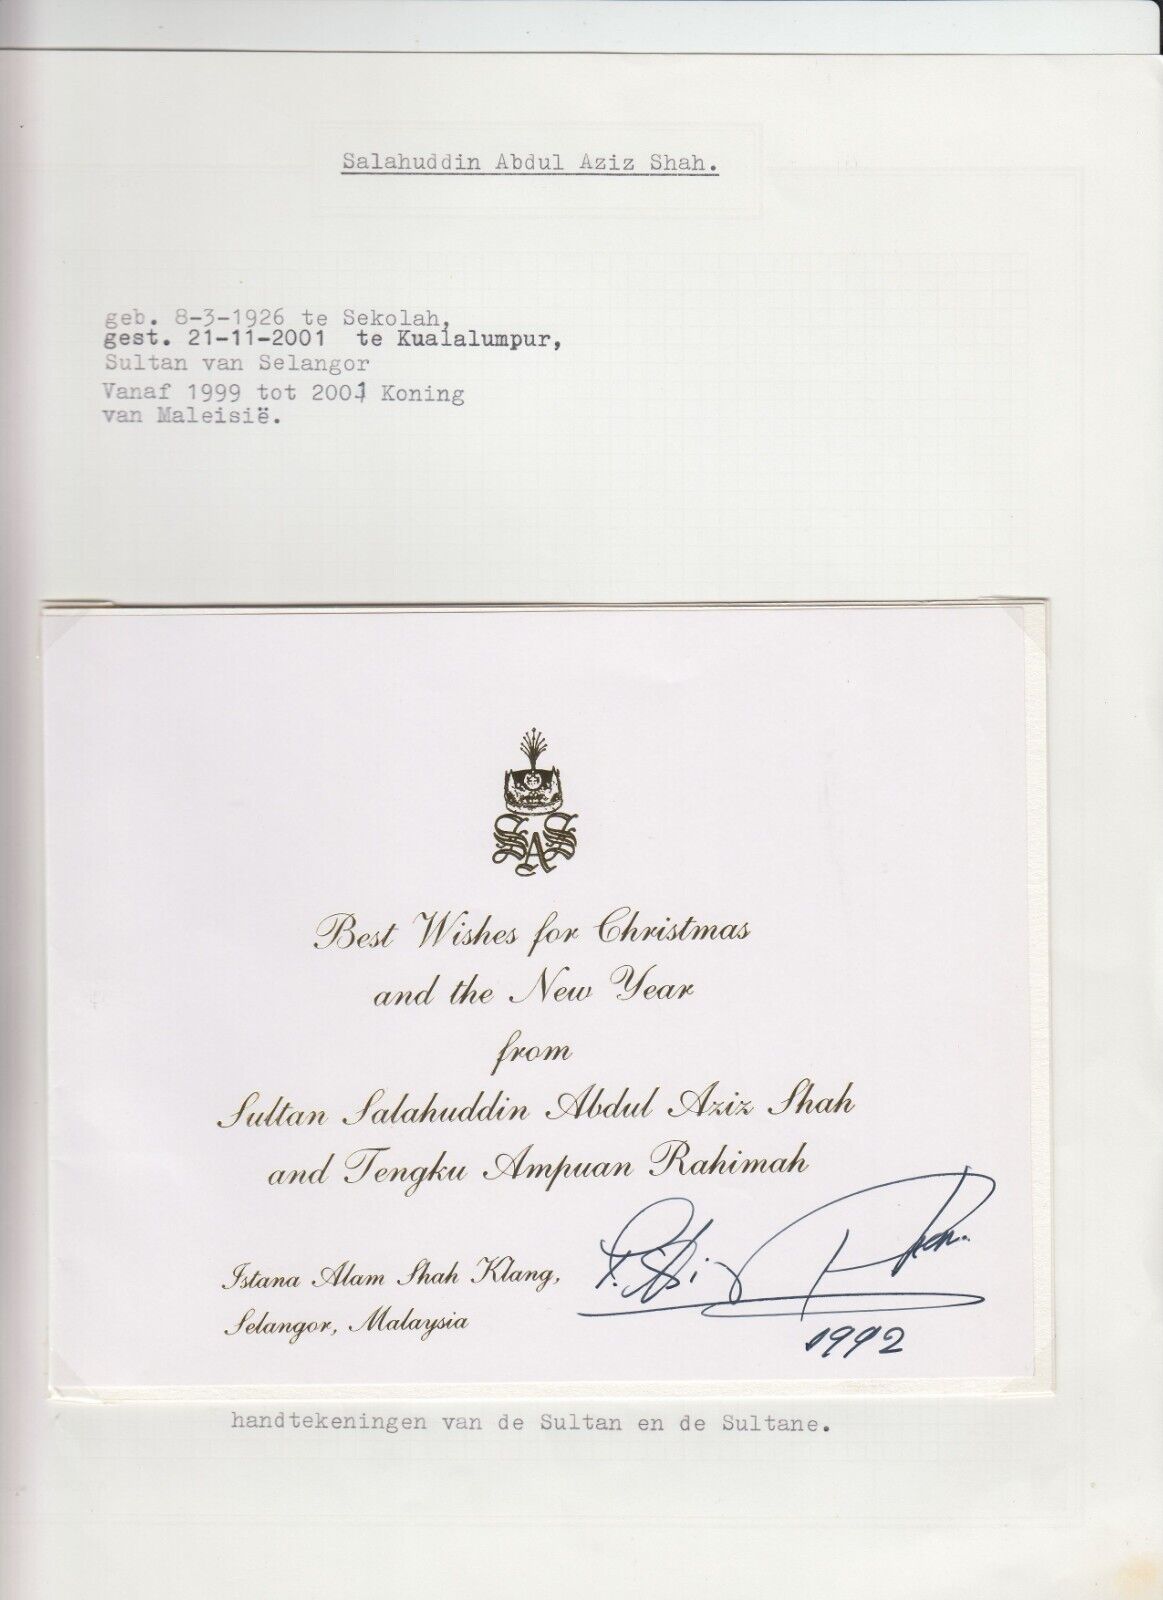 Sultan Salahuddin Abdul Aziz Shah, Original Autograph, Royalty, Malaysia (L6234)